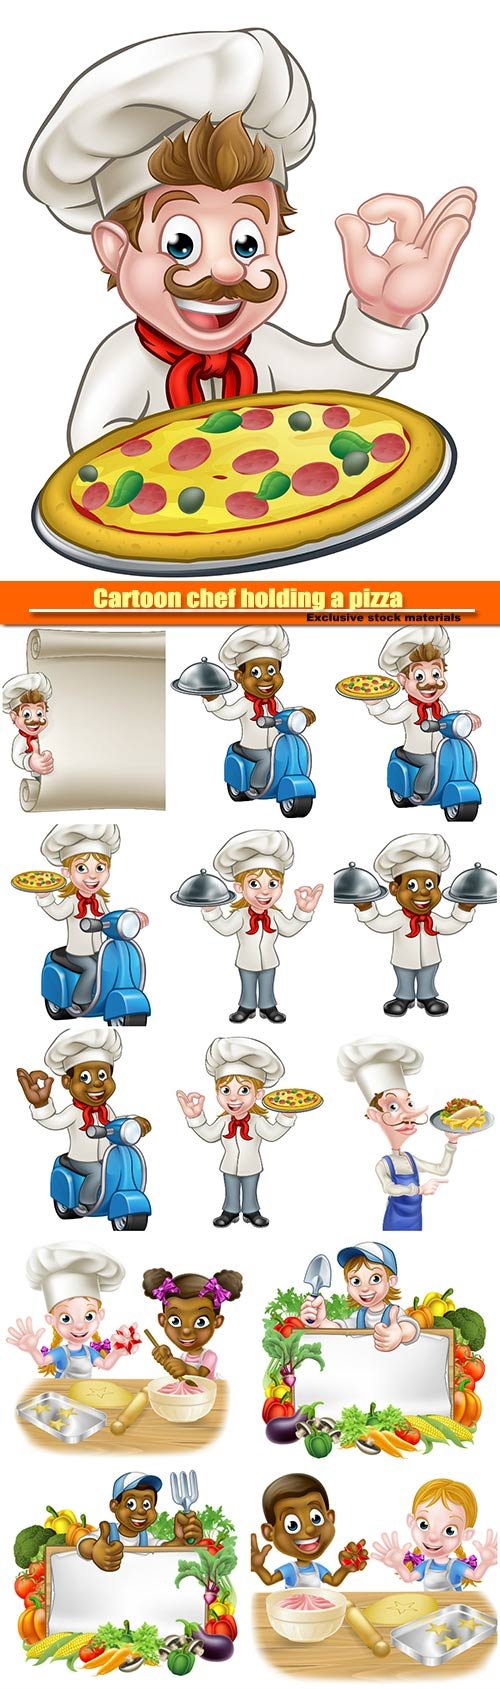 Cartoon chef holding a pizza